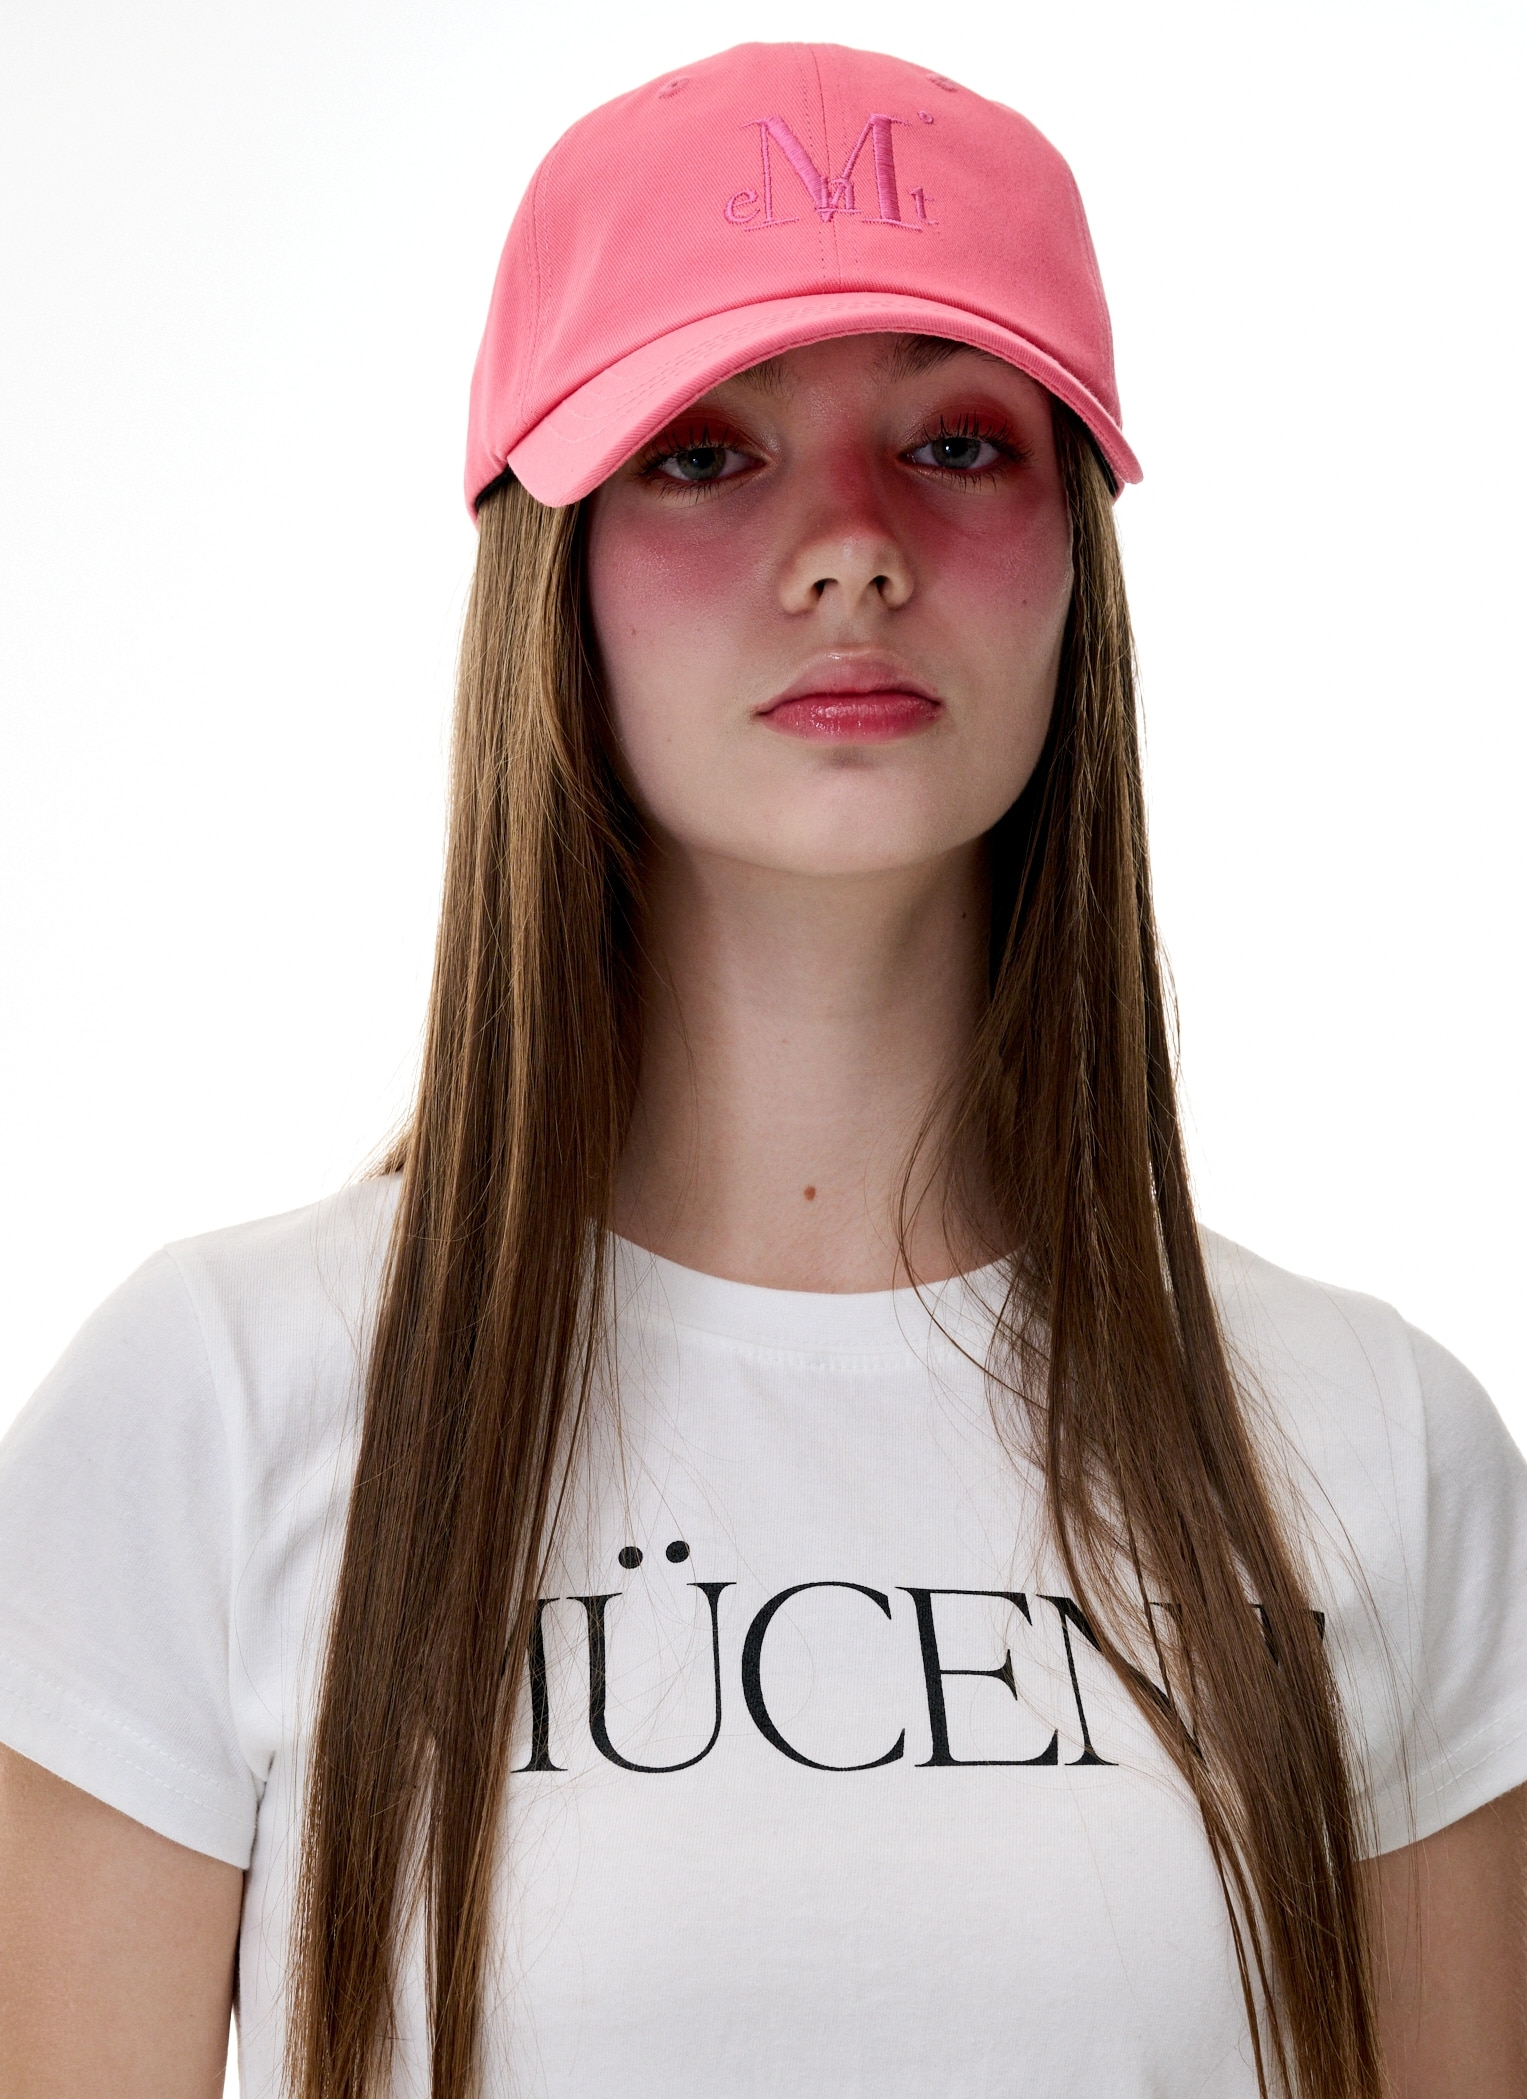 MUCENT SIGNATURE BALL CAP (Coral pink) 무센트 시그니처 볼캡 (코랄 핑크)